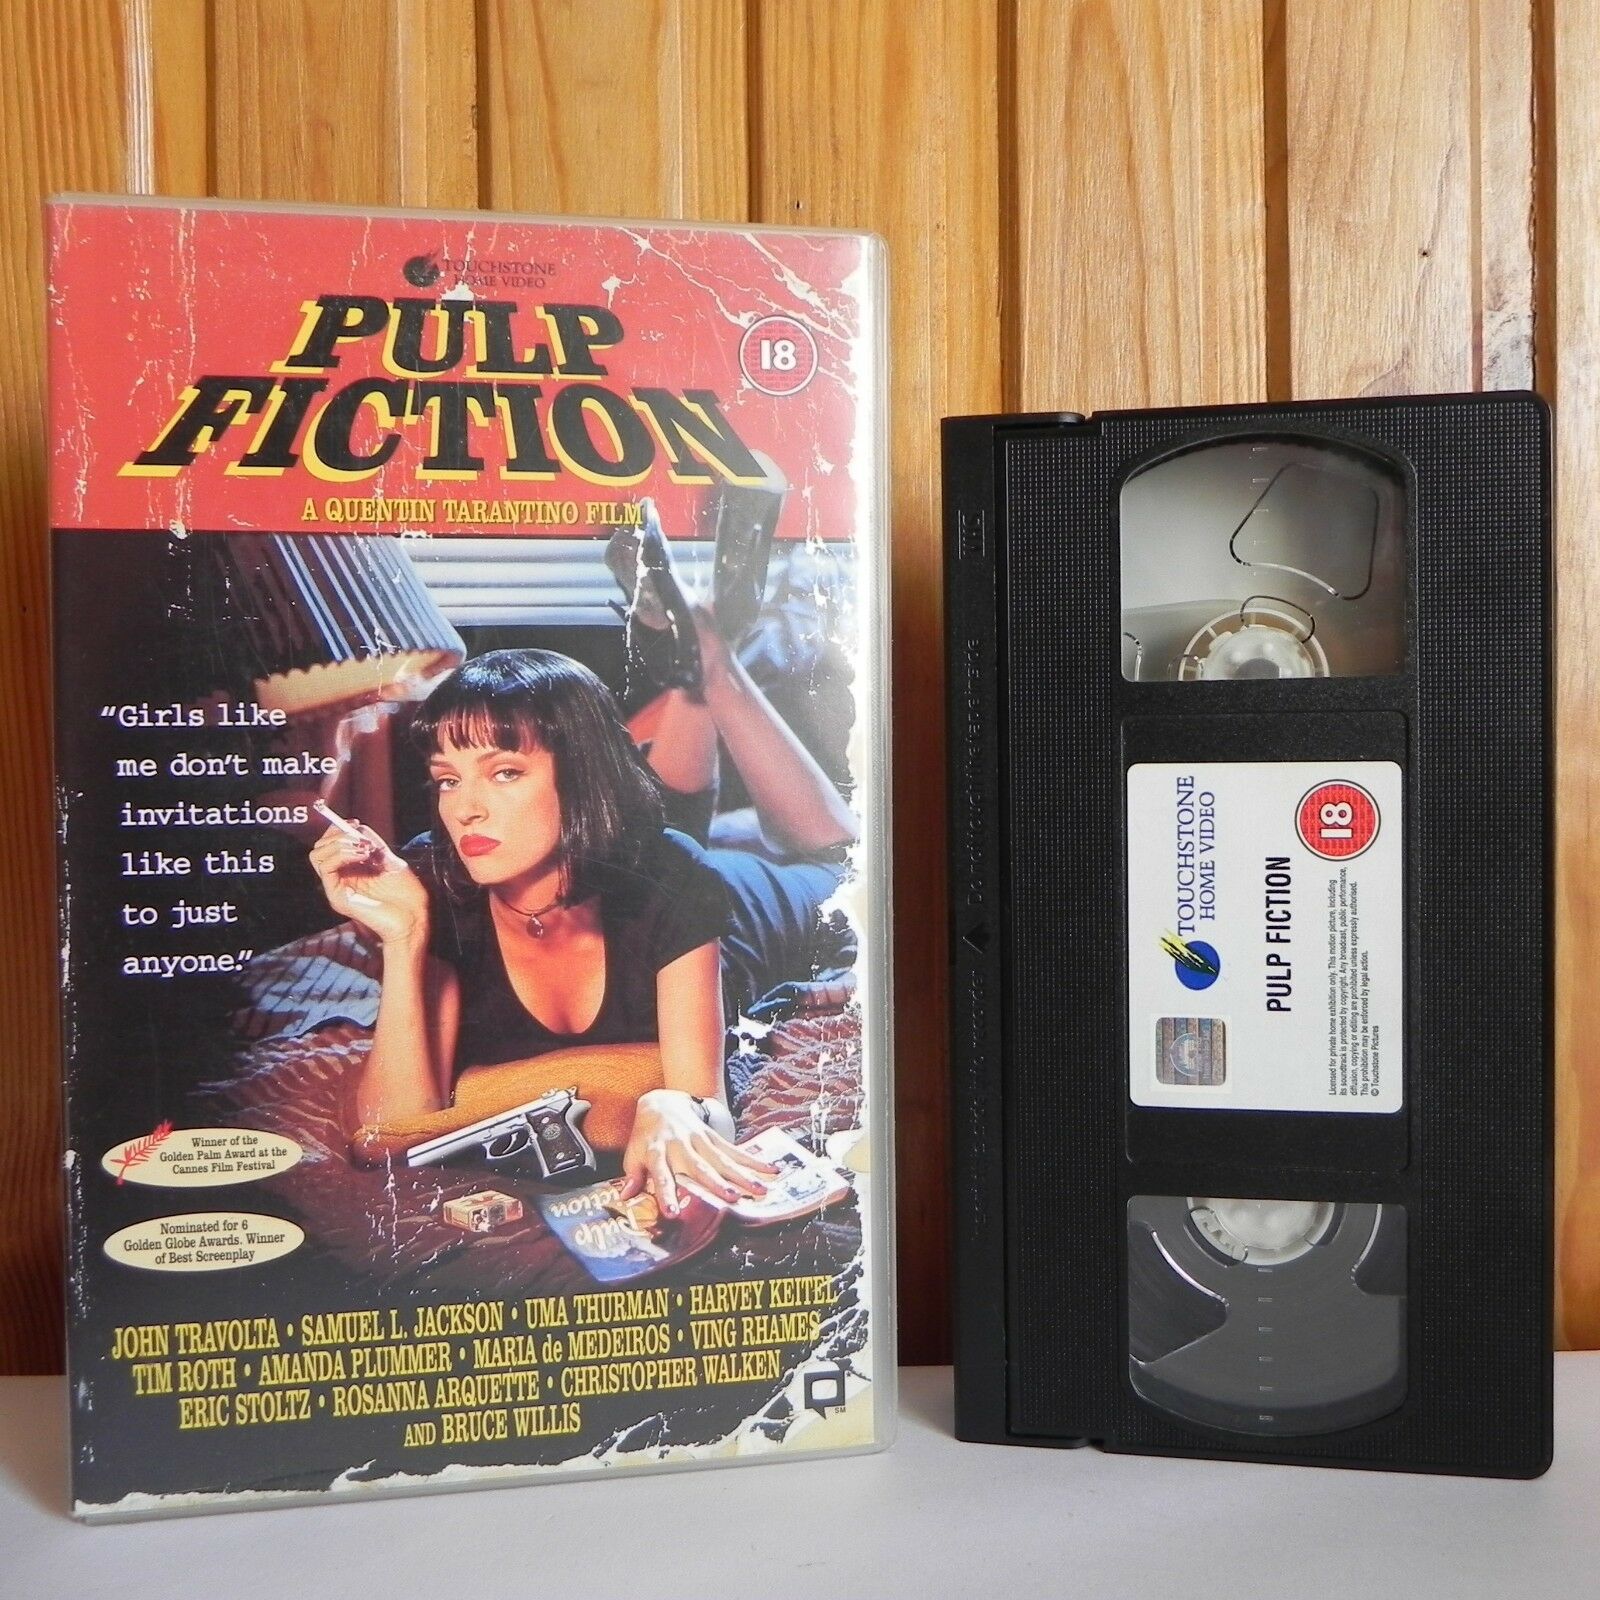 Pulp Fiction - The Large Box Edit - Touchstone - Drama - Travolta - Willis - VHS-